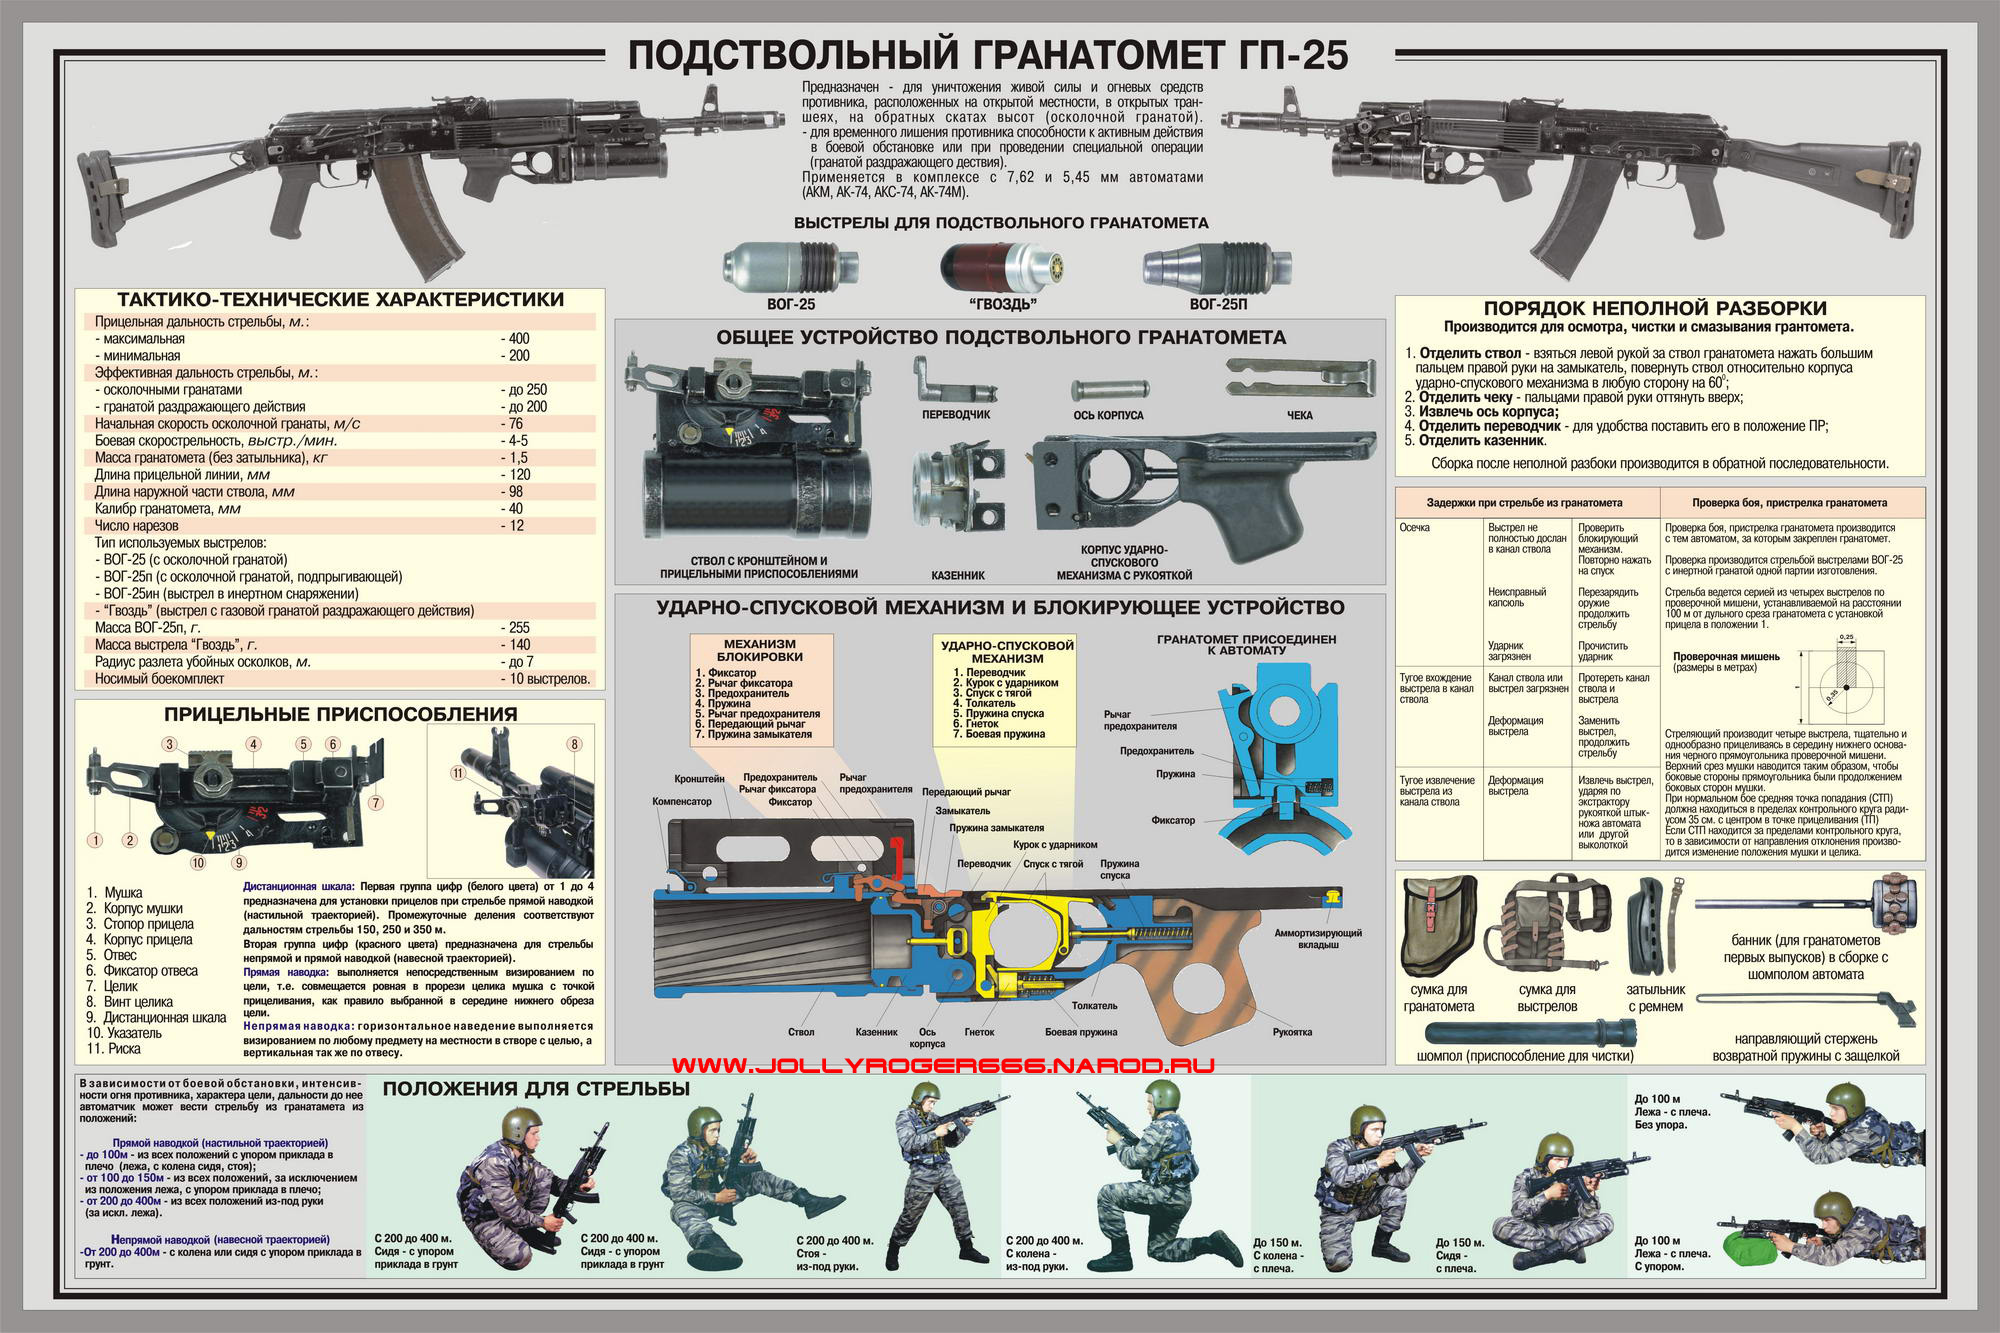 http://jollyroger666.narod.ru/granatomet/GP25/GP25_PLAKAT.jpg